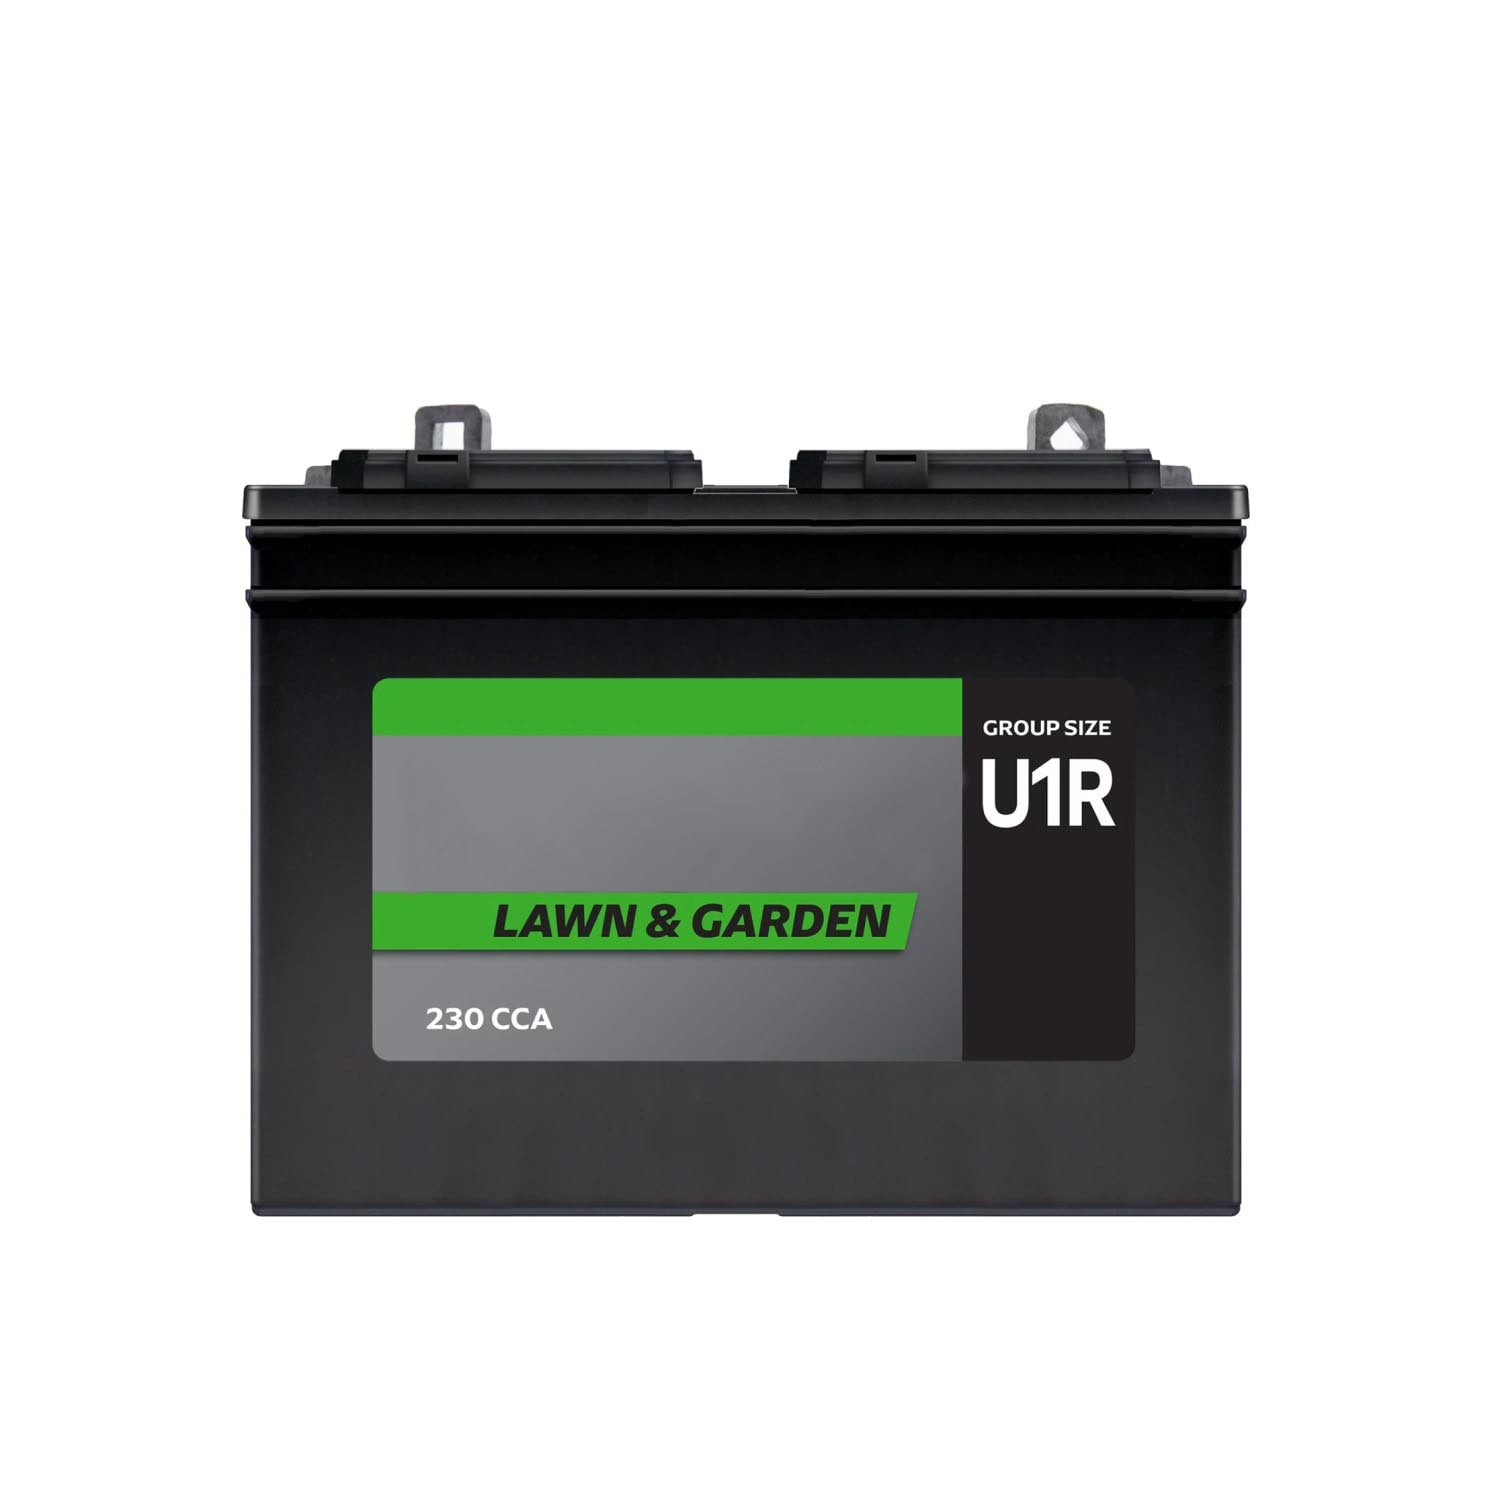 TurboCharge Premium Car Battery